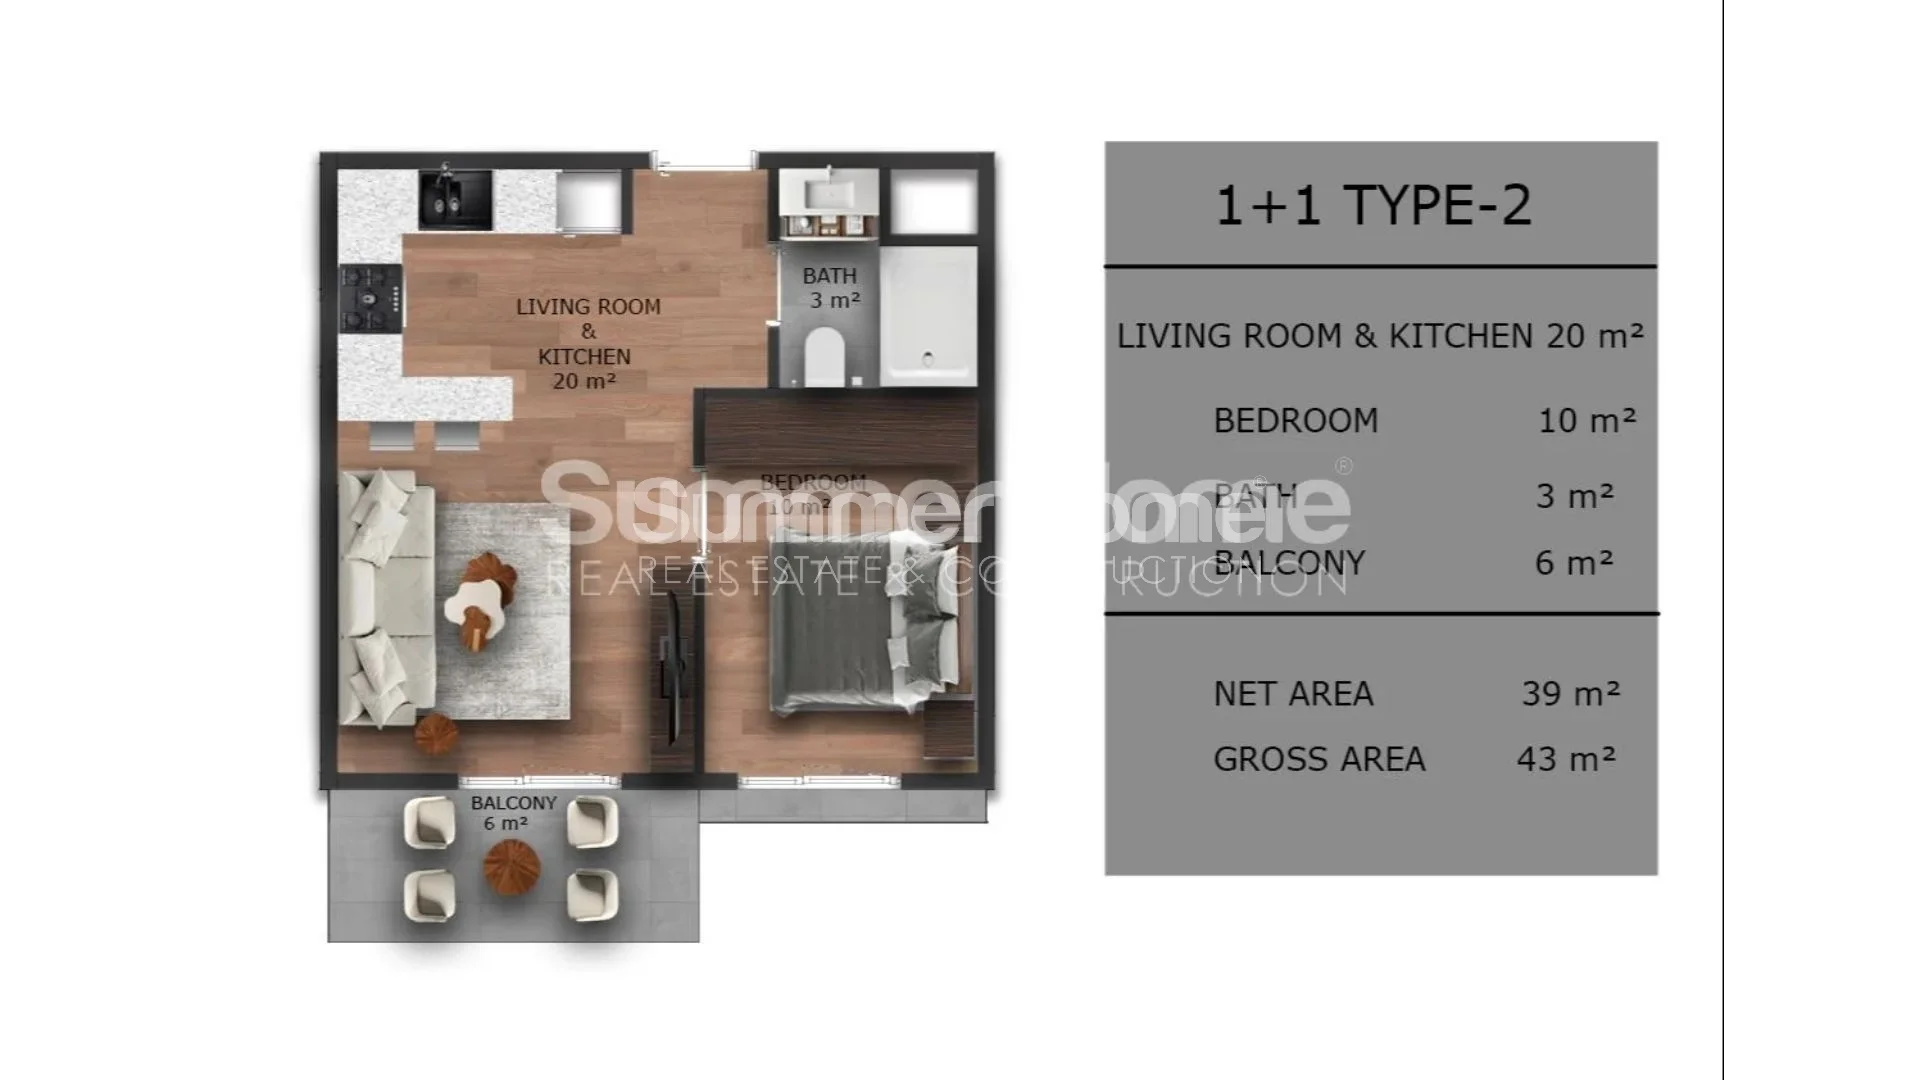 Appealing one bedroomed apartments in Mezitli, Mersin Plan - 24